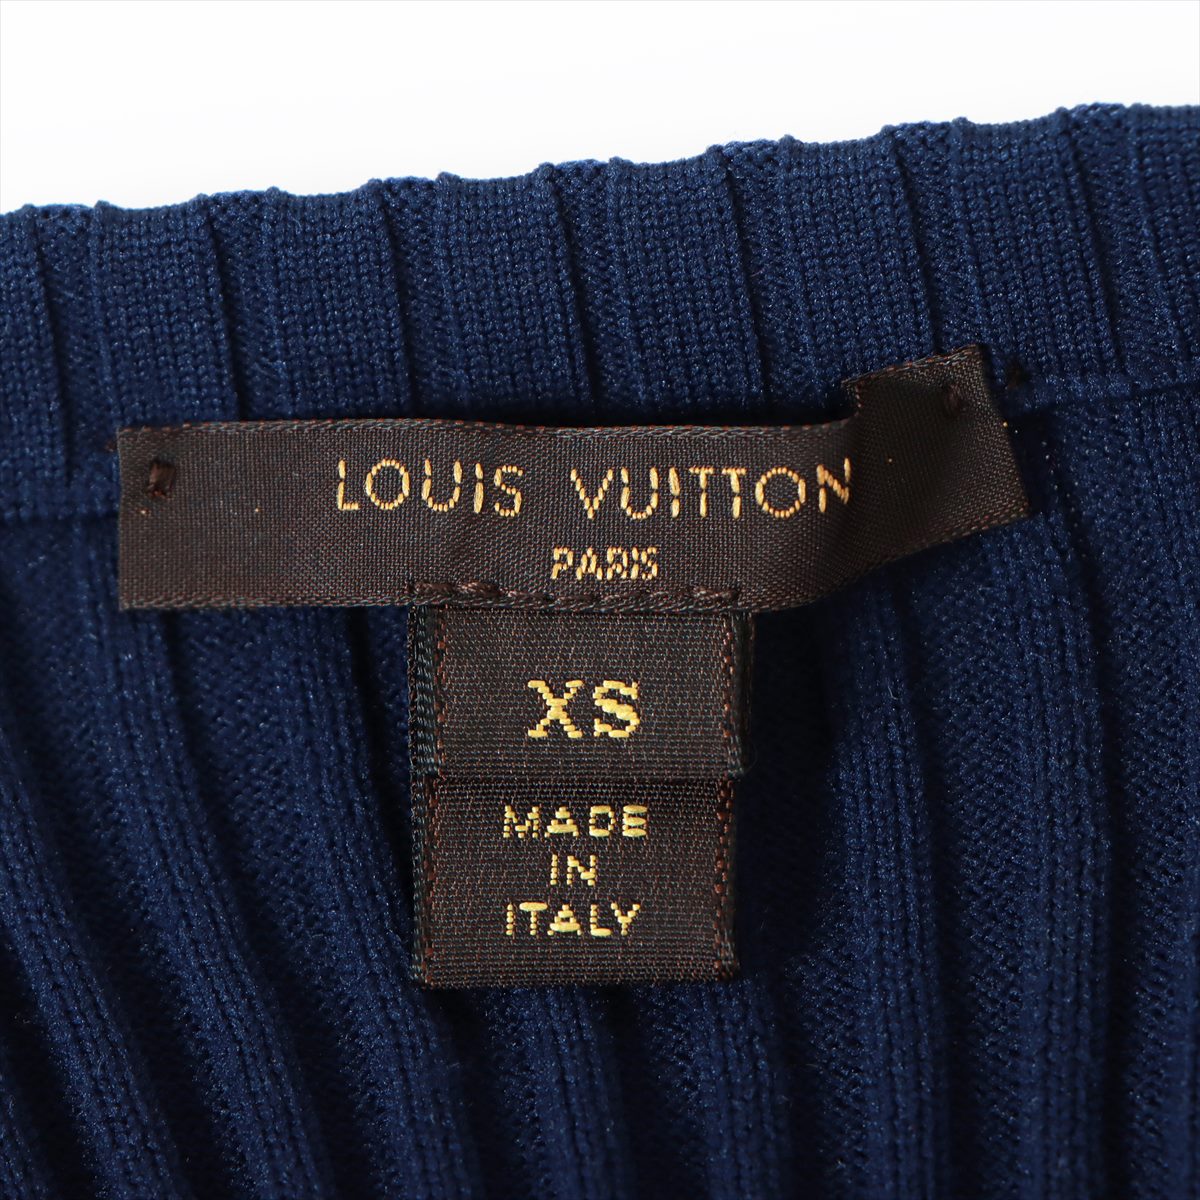 Louis Vuitton Nylon Dress XS Ladies' Navy blue  flower embroidery